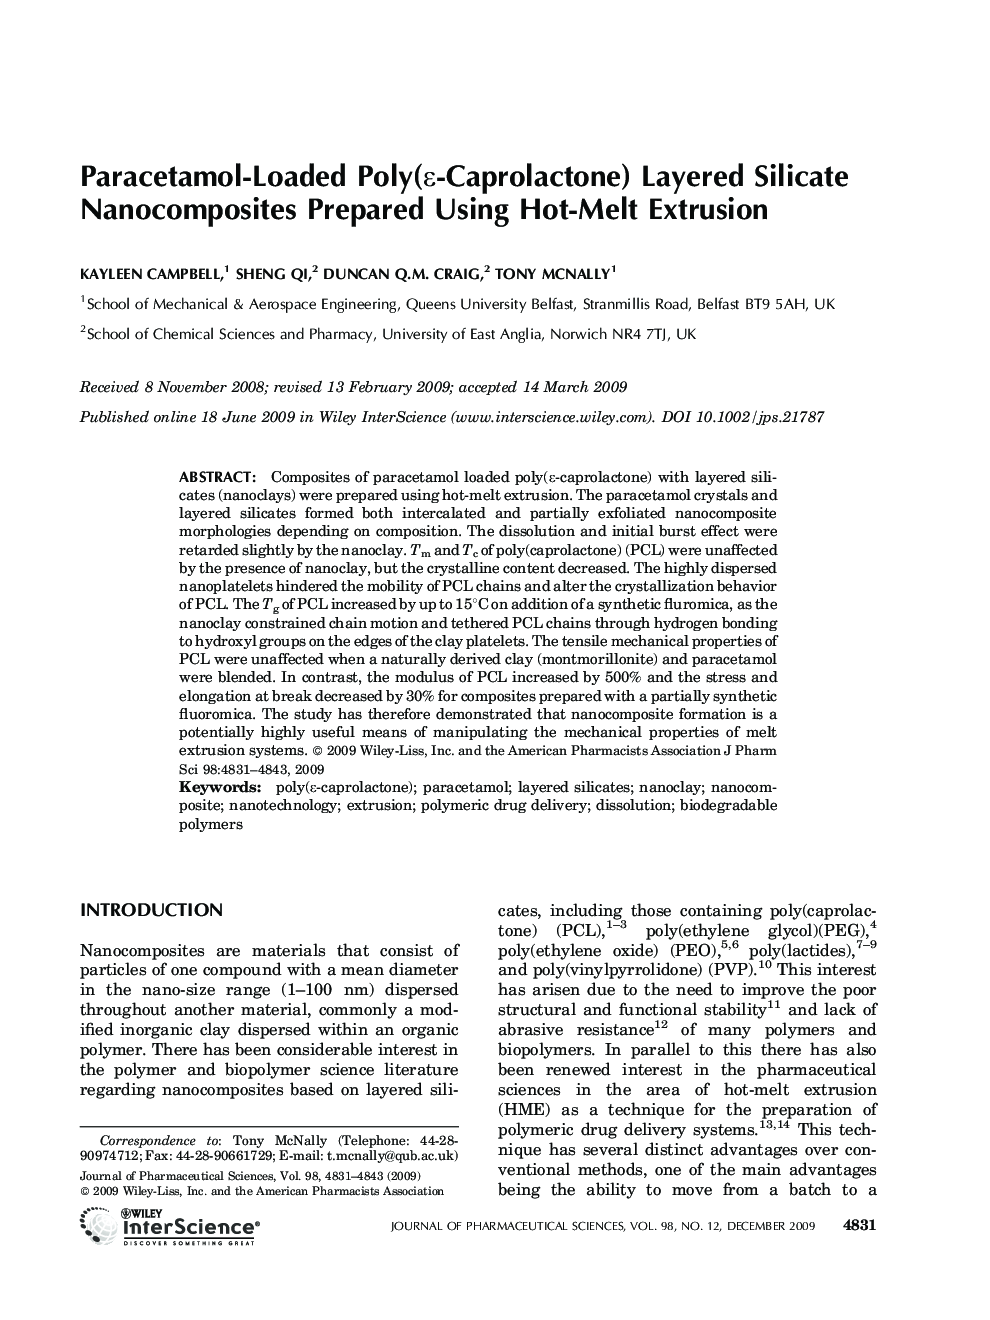 Paracetamol-loaded poly(Îµ-caprolactone) layered silicate nanocomposites prepared using hot-melt extrusion